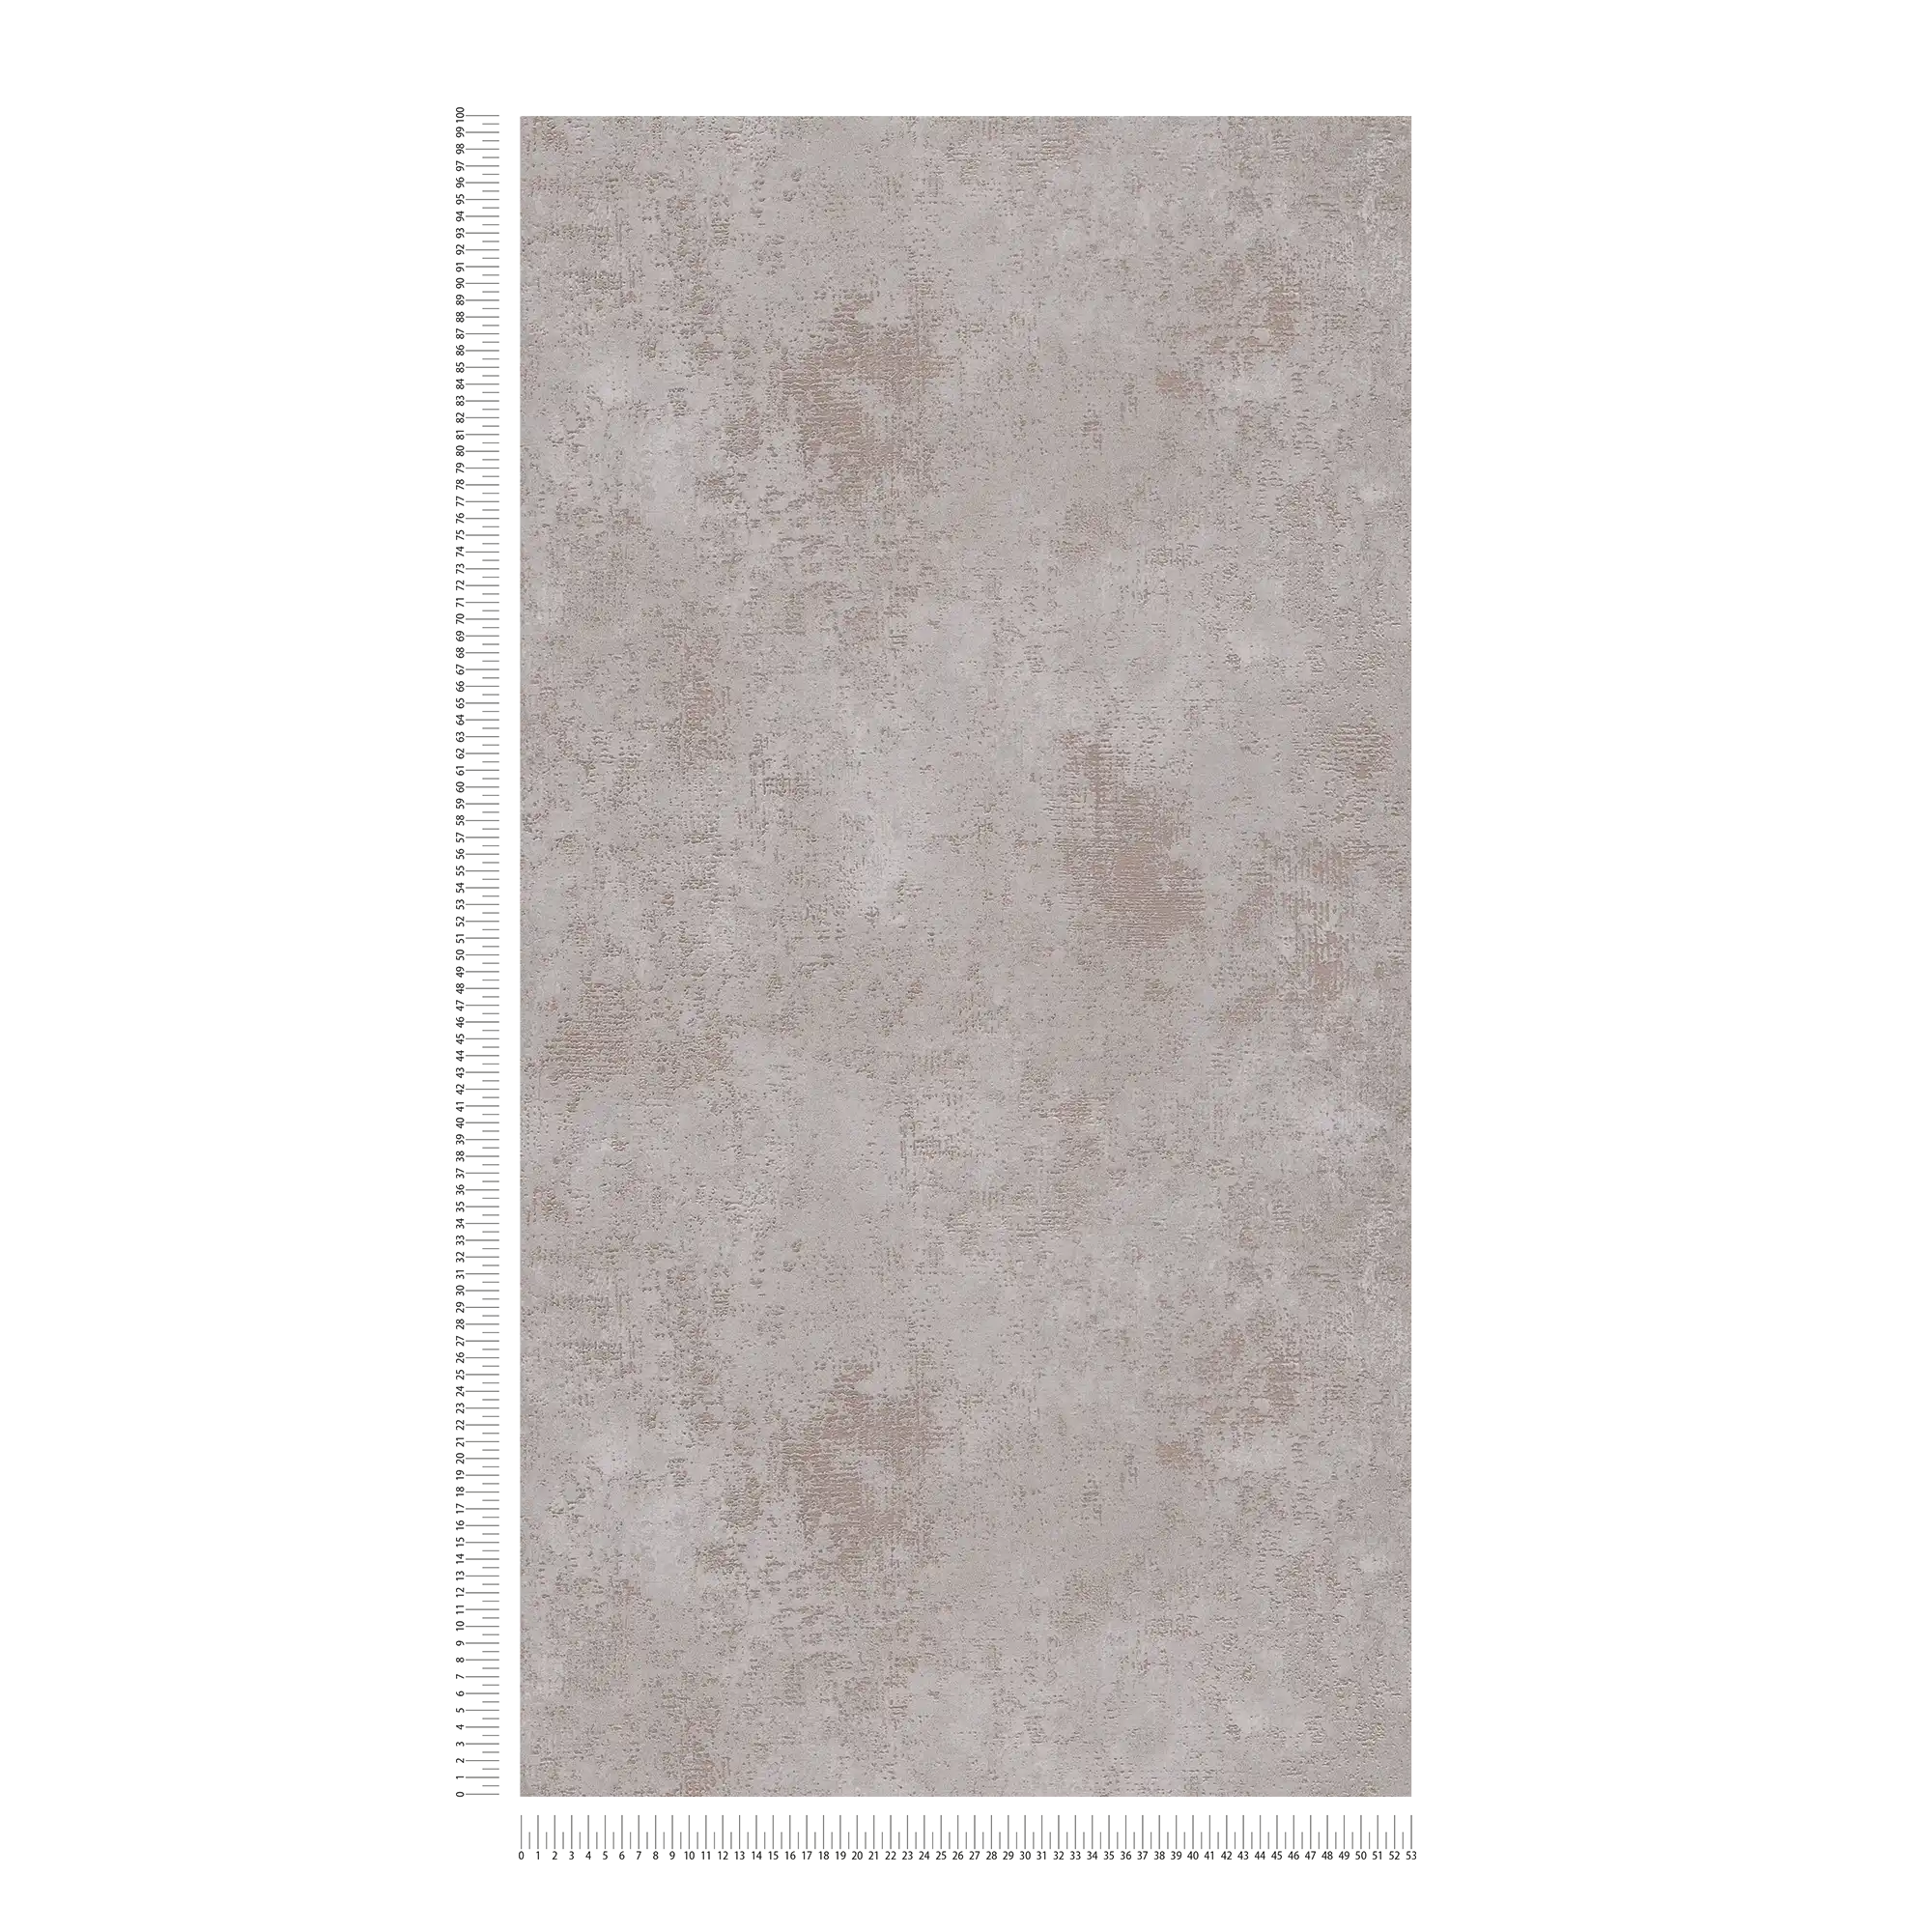             Grey non-woven wallpaper with metallic texture effect
        